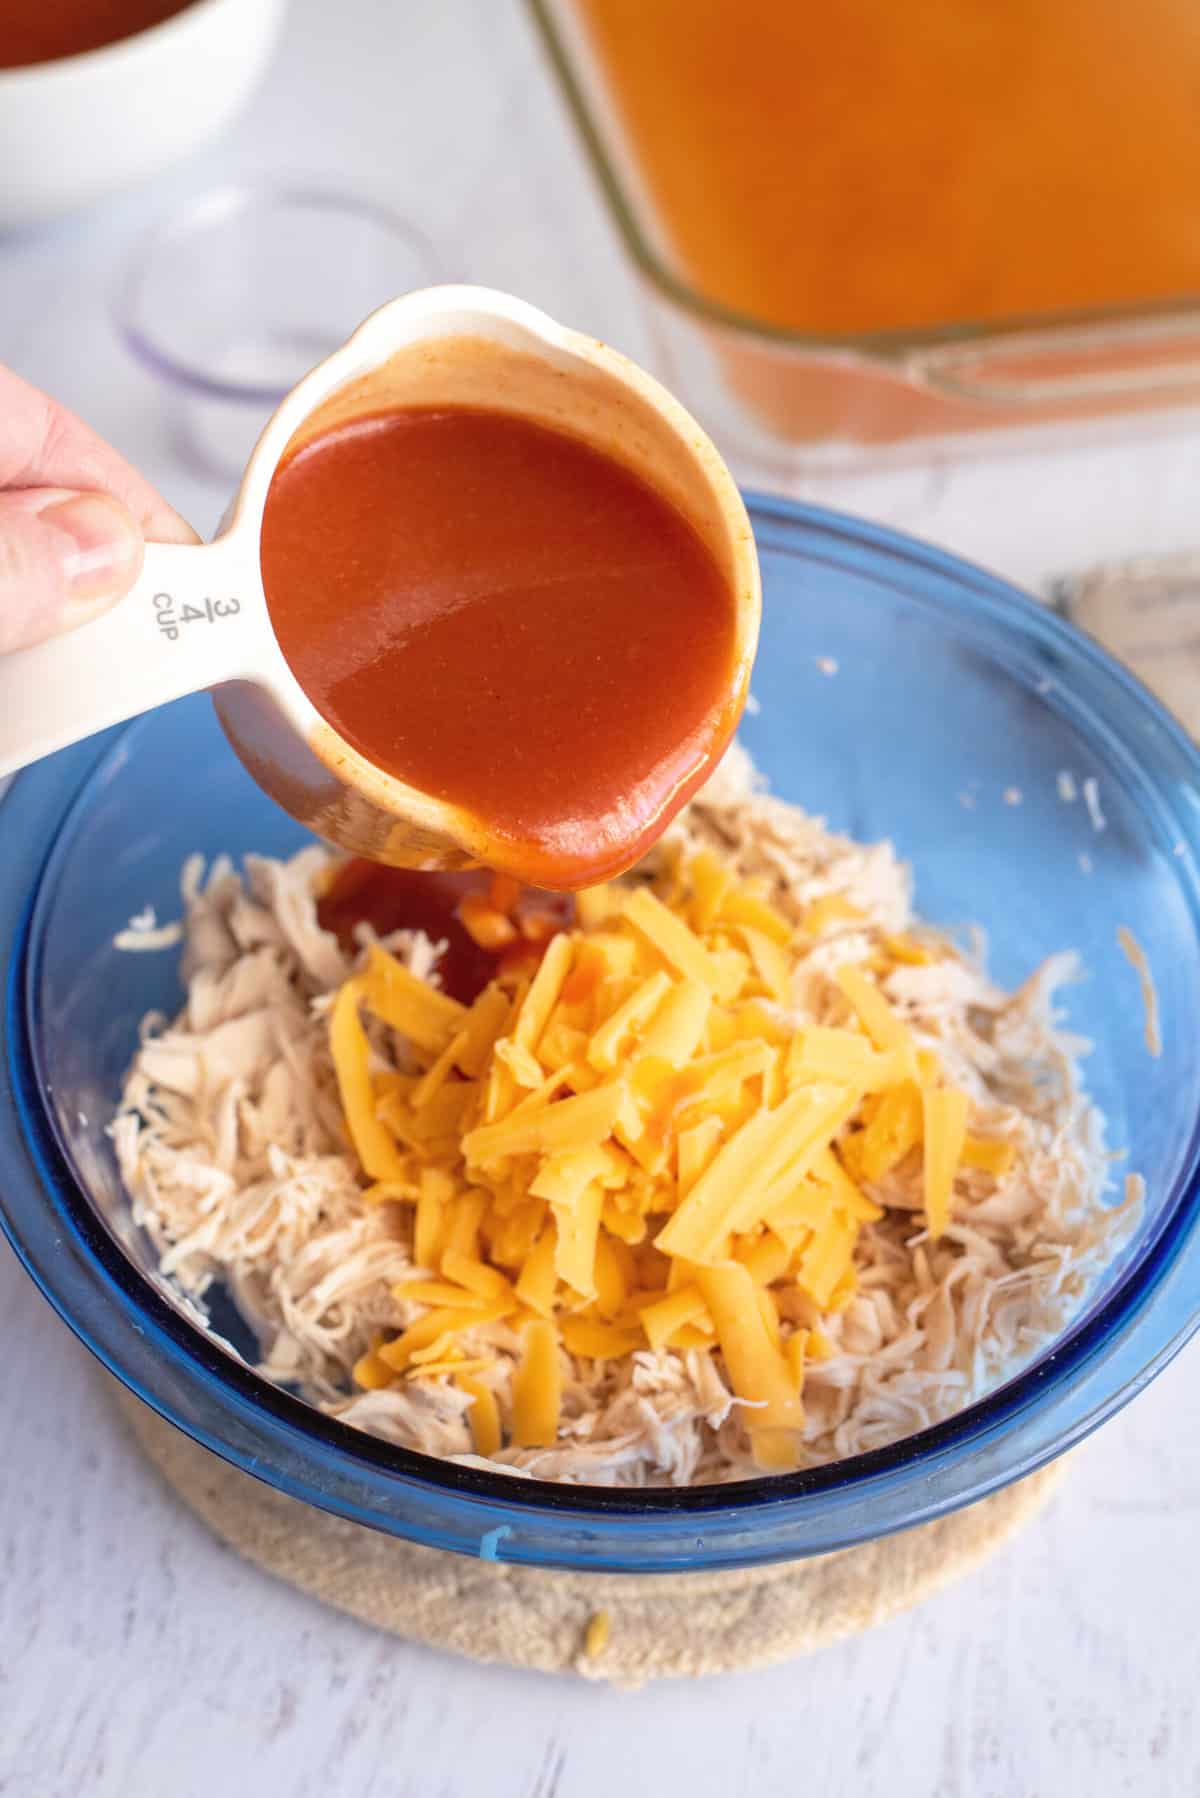 Add enchilada sauce to mixing bowl.